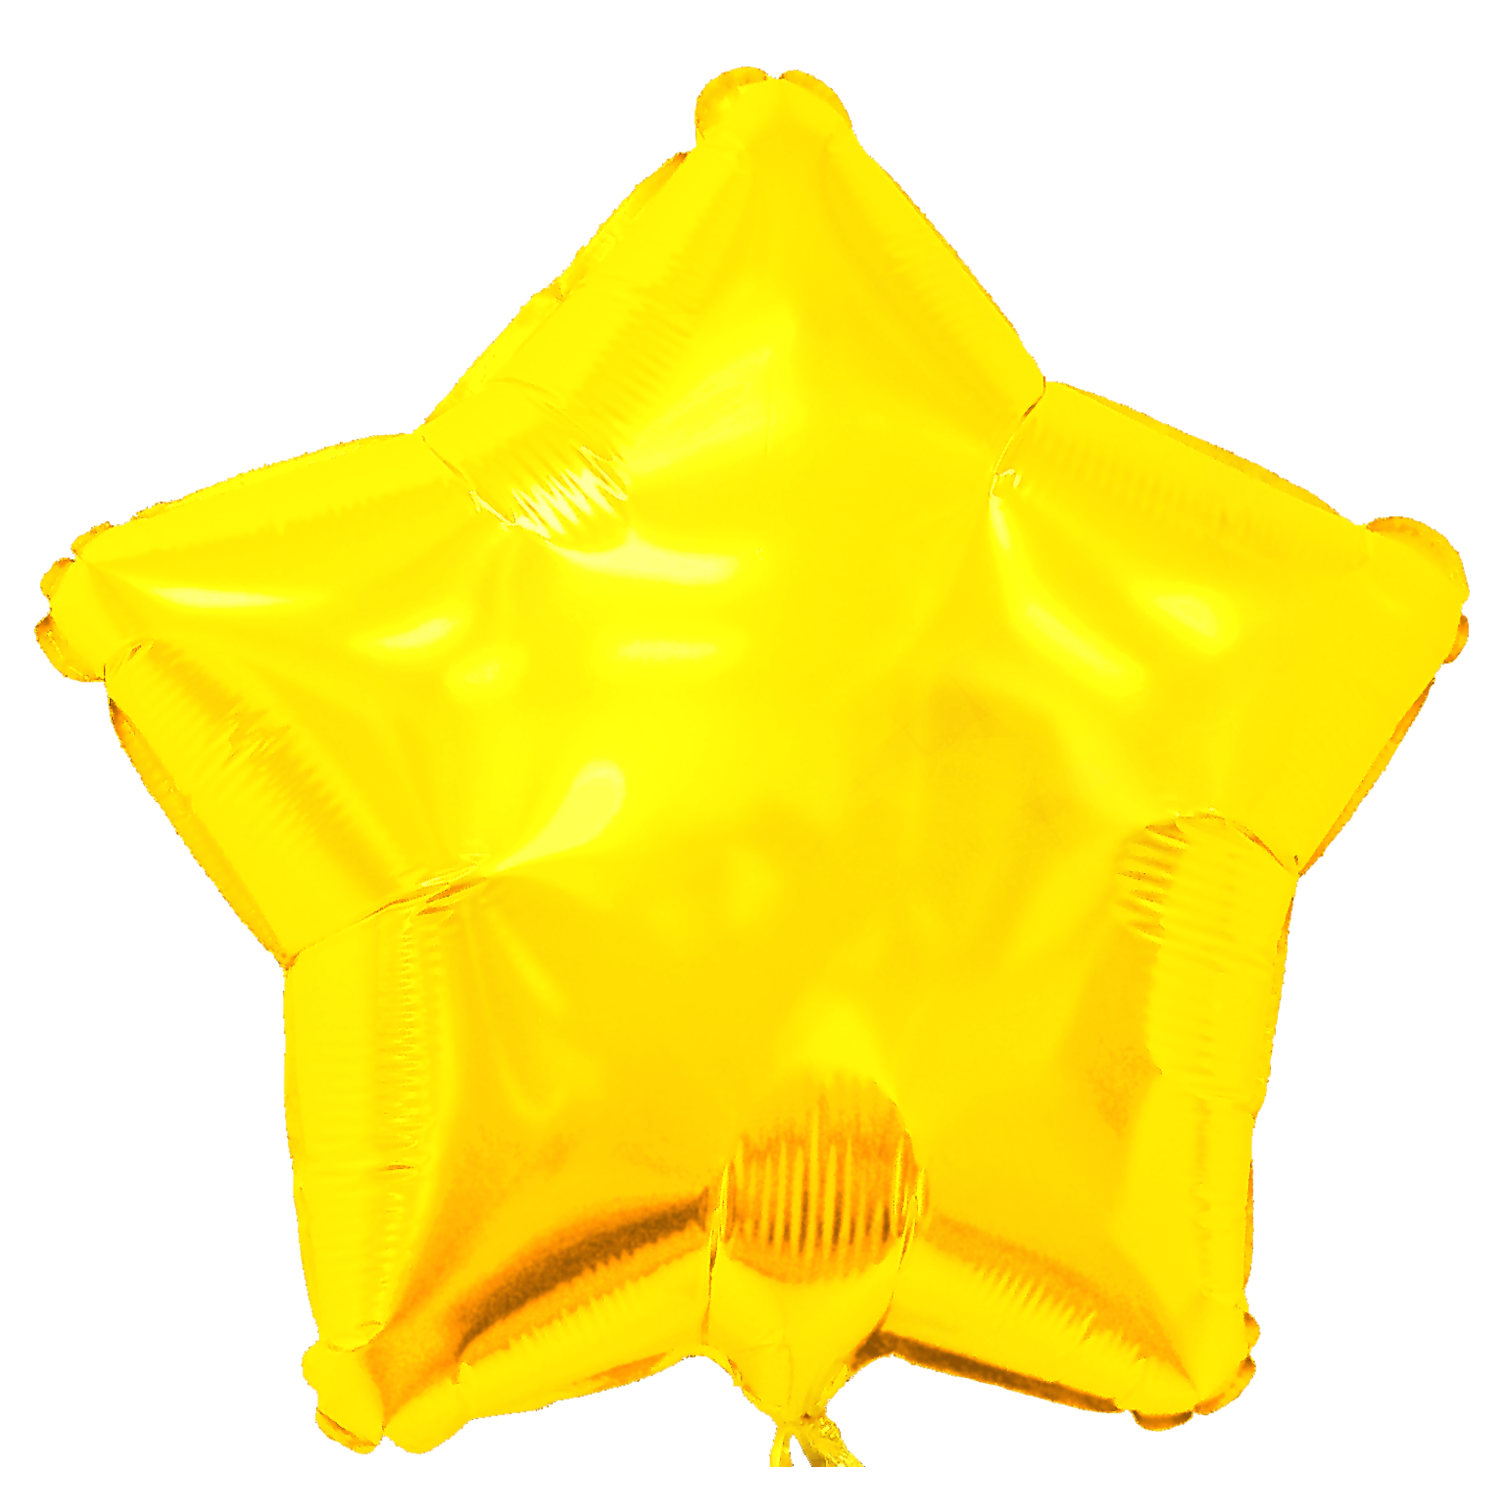 http://images.officebrain.com/migration-api-hidden-new/web/images/626/myrn-star-yellow.png